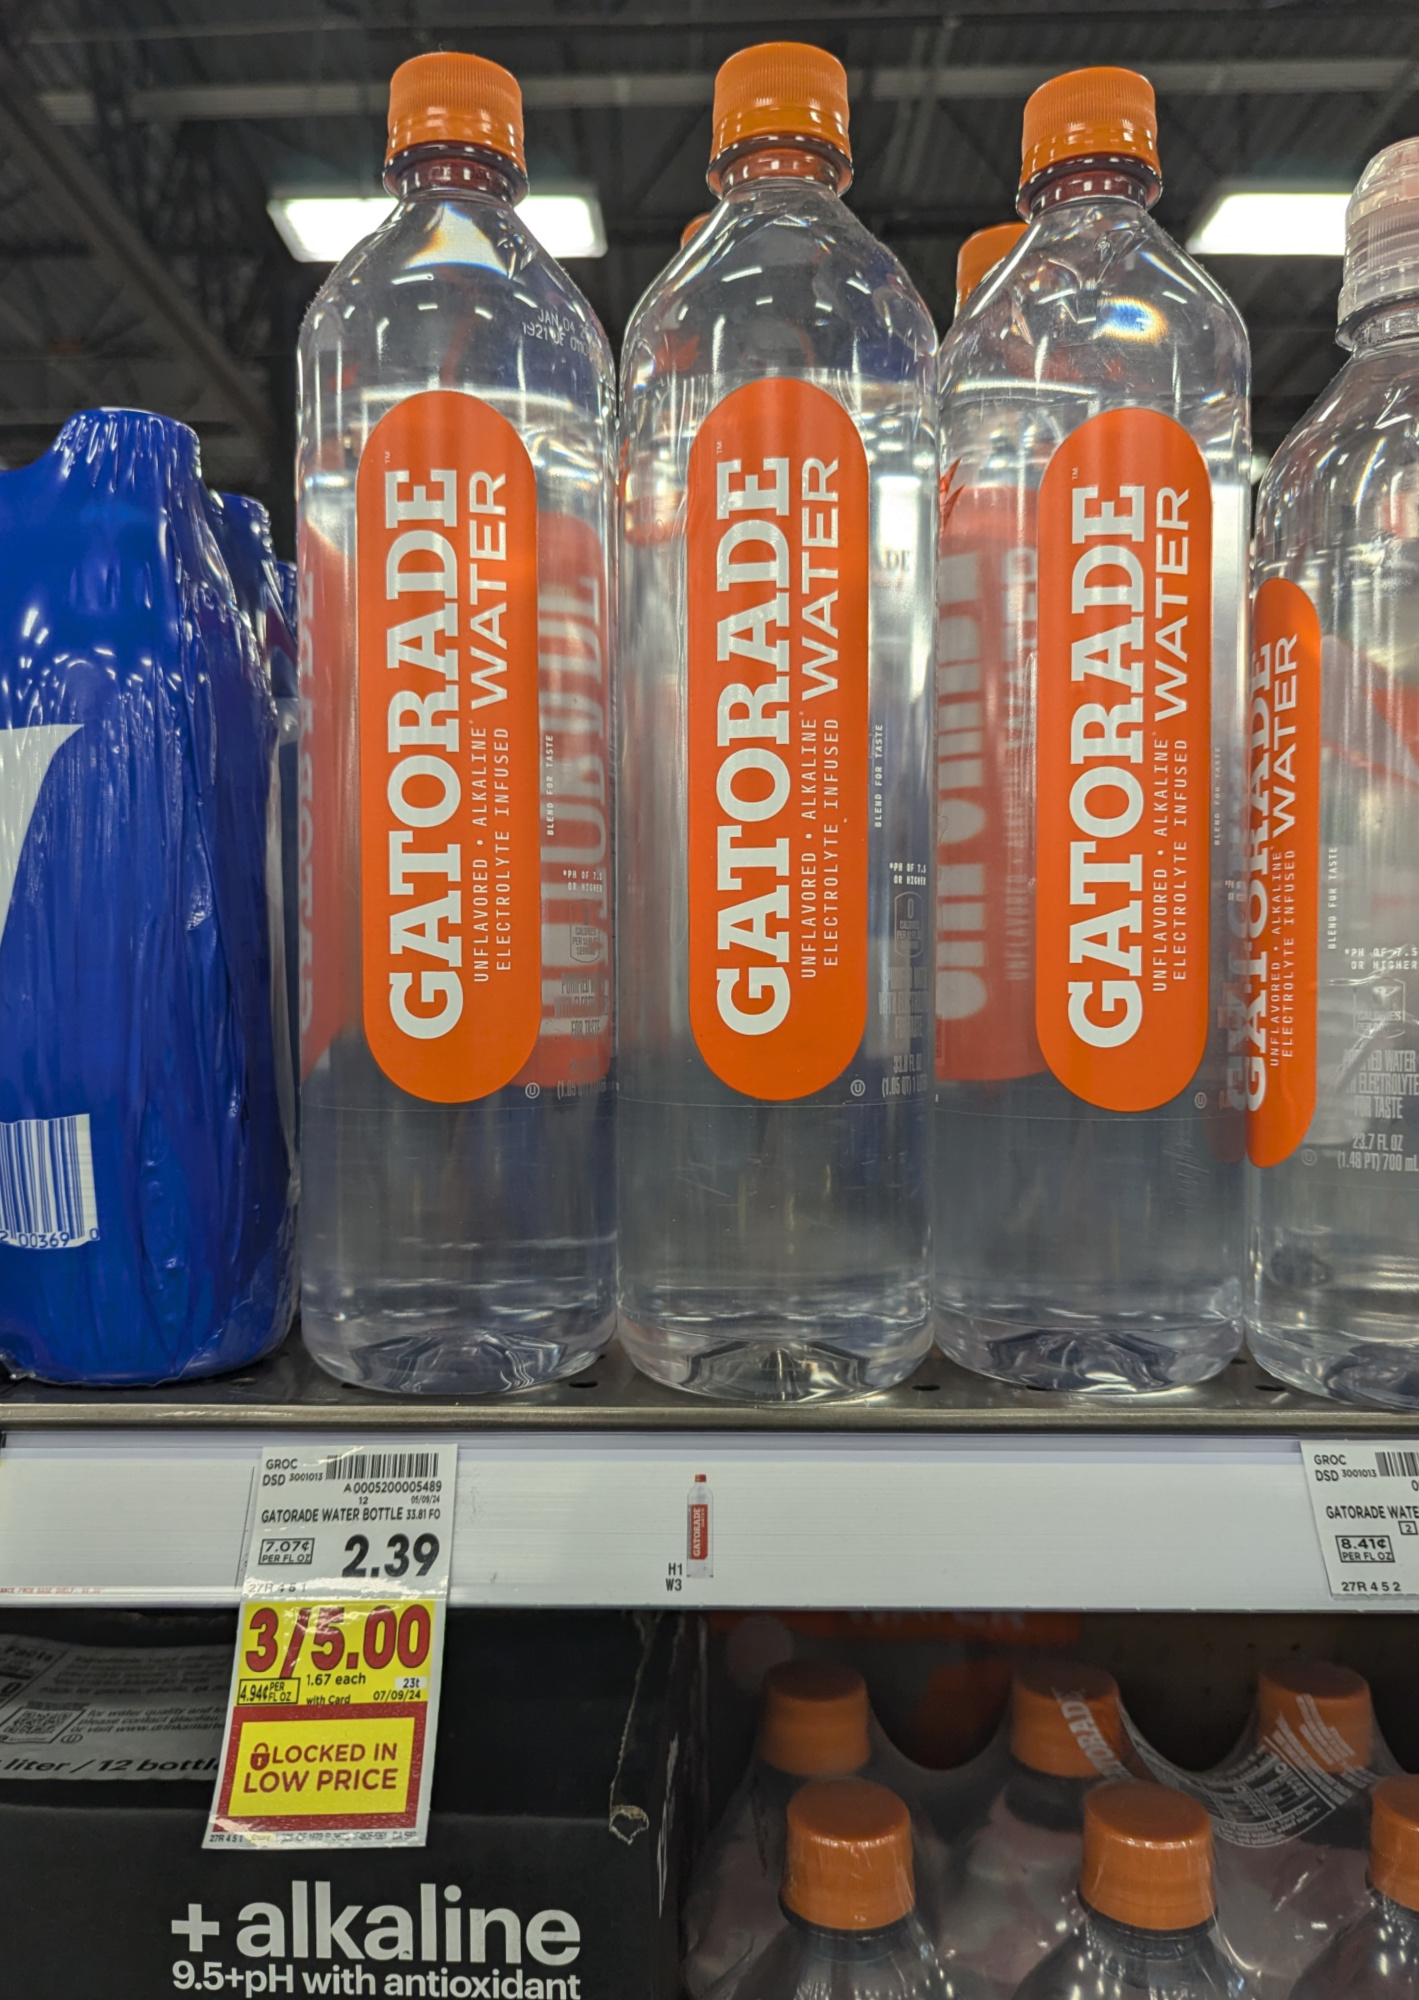 Gatorade Water As Low As $1.17 Per Bottle At Kroger - iHeartKroger